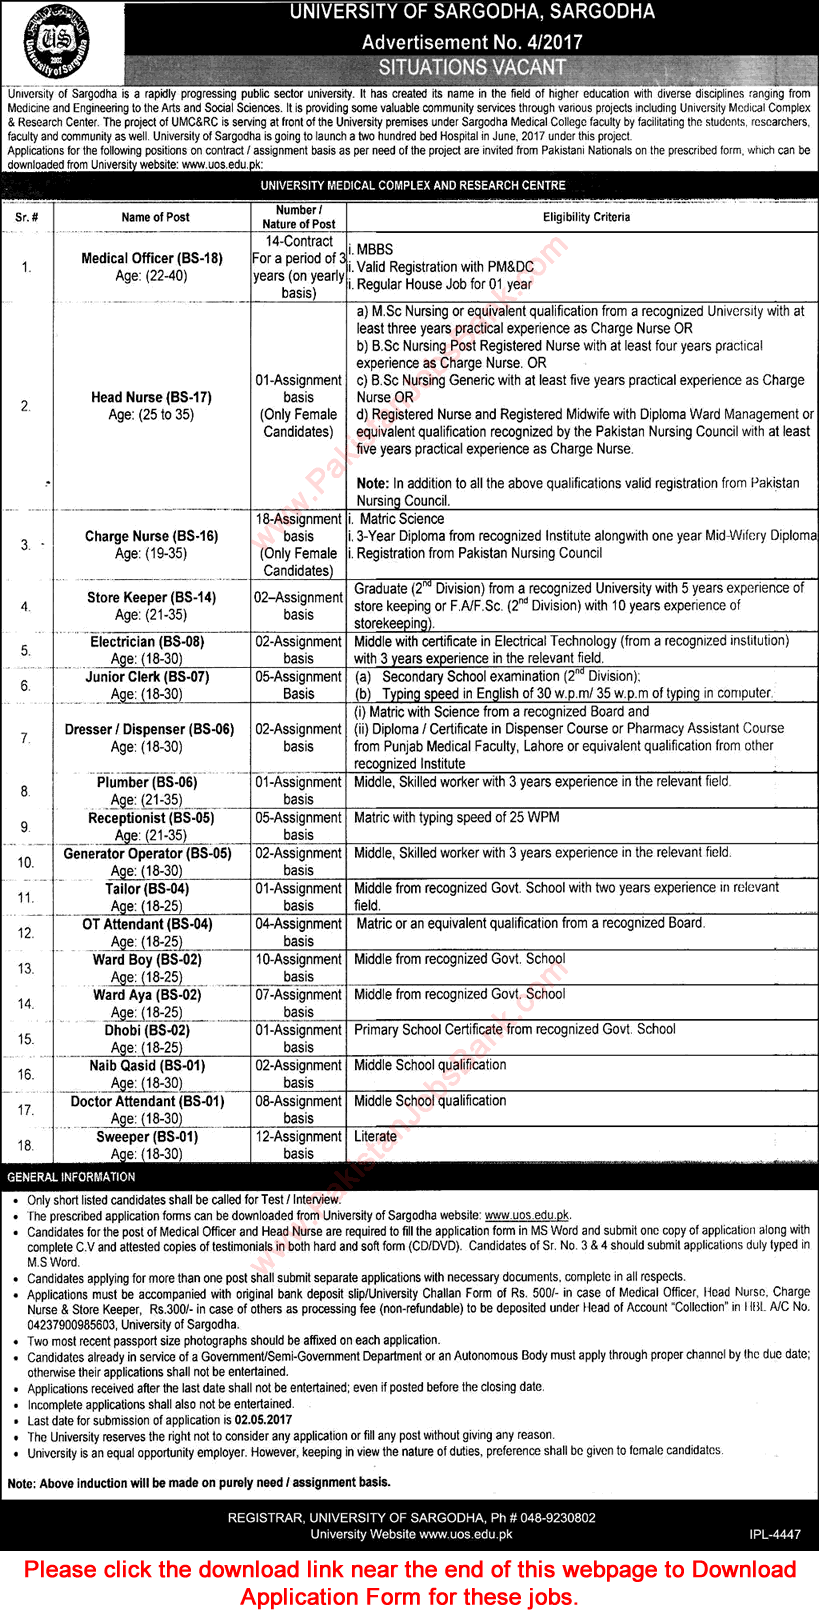 University of Sargodha Jobs April 2017 Application Form Nurses, Medical Officers, Ward Boys & Others UOS Latest